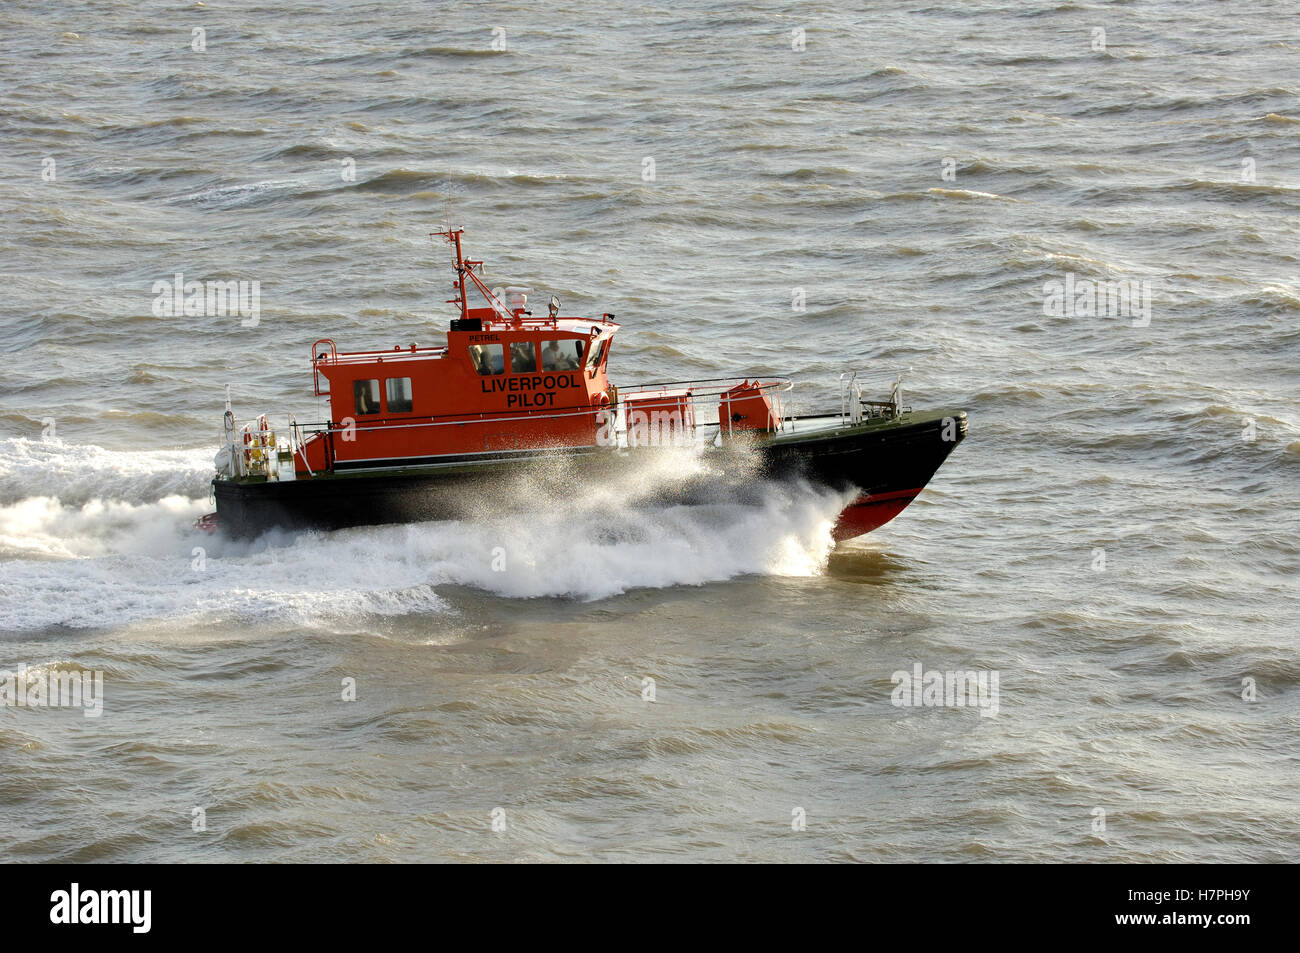 Liverpool Pilot Launch 'Petrel' at sea River Mersey, Liverpool, England, UK. Stock Photo